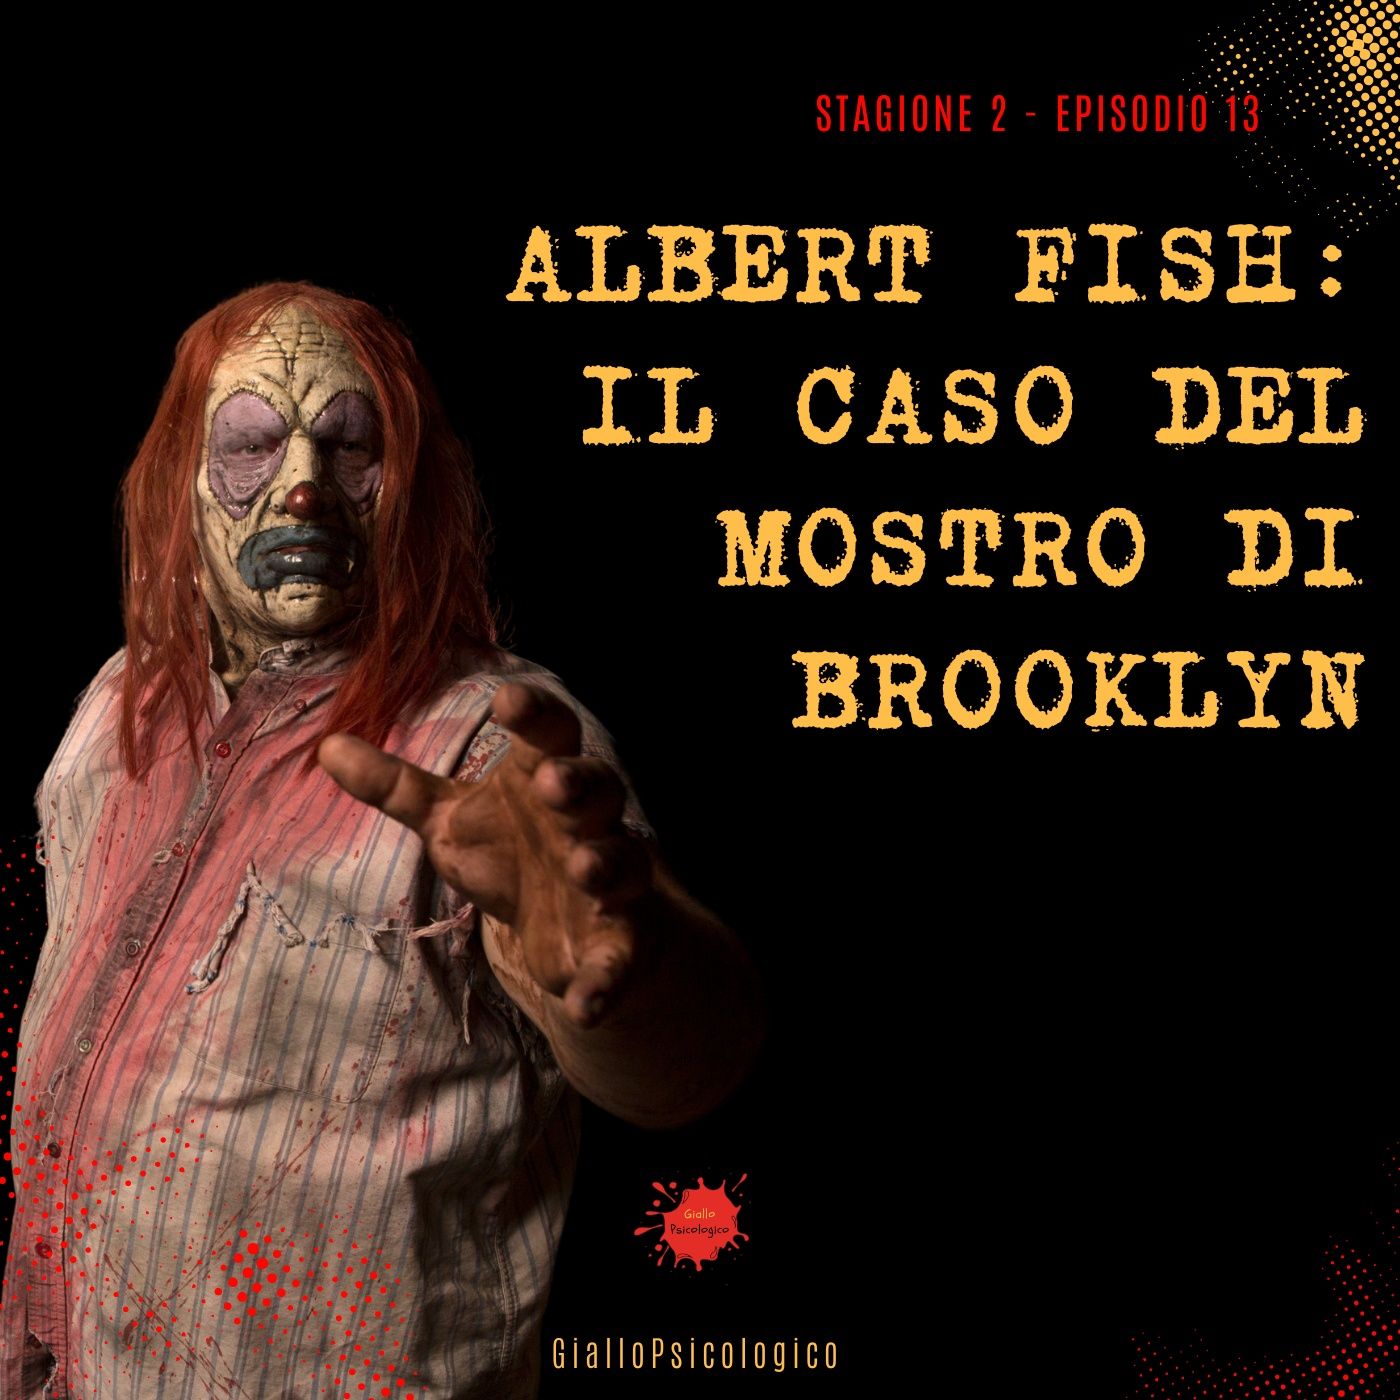 Il mostro di Brooklyn: i massacri di Albert Fish